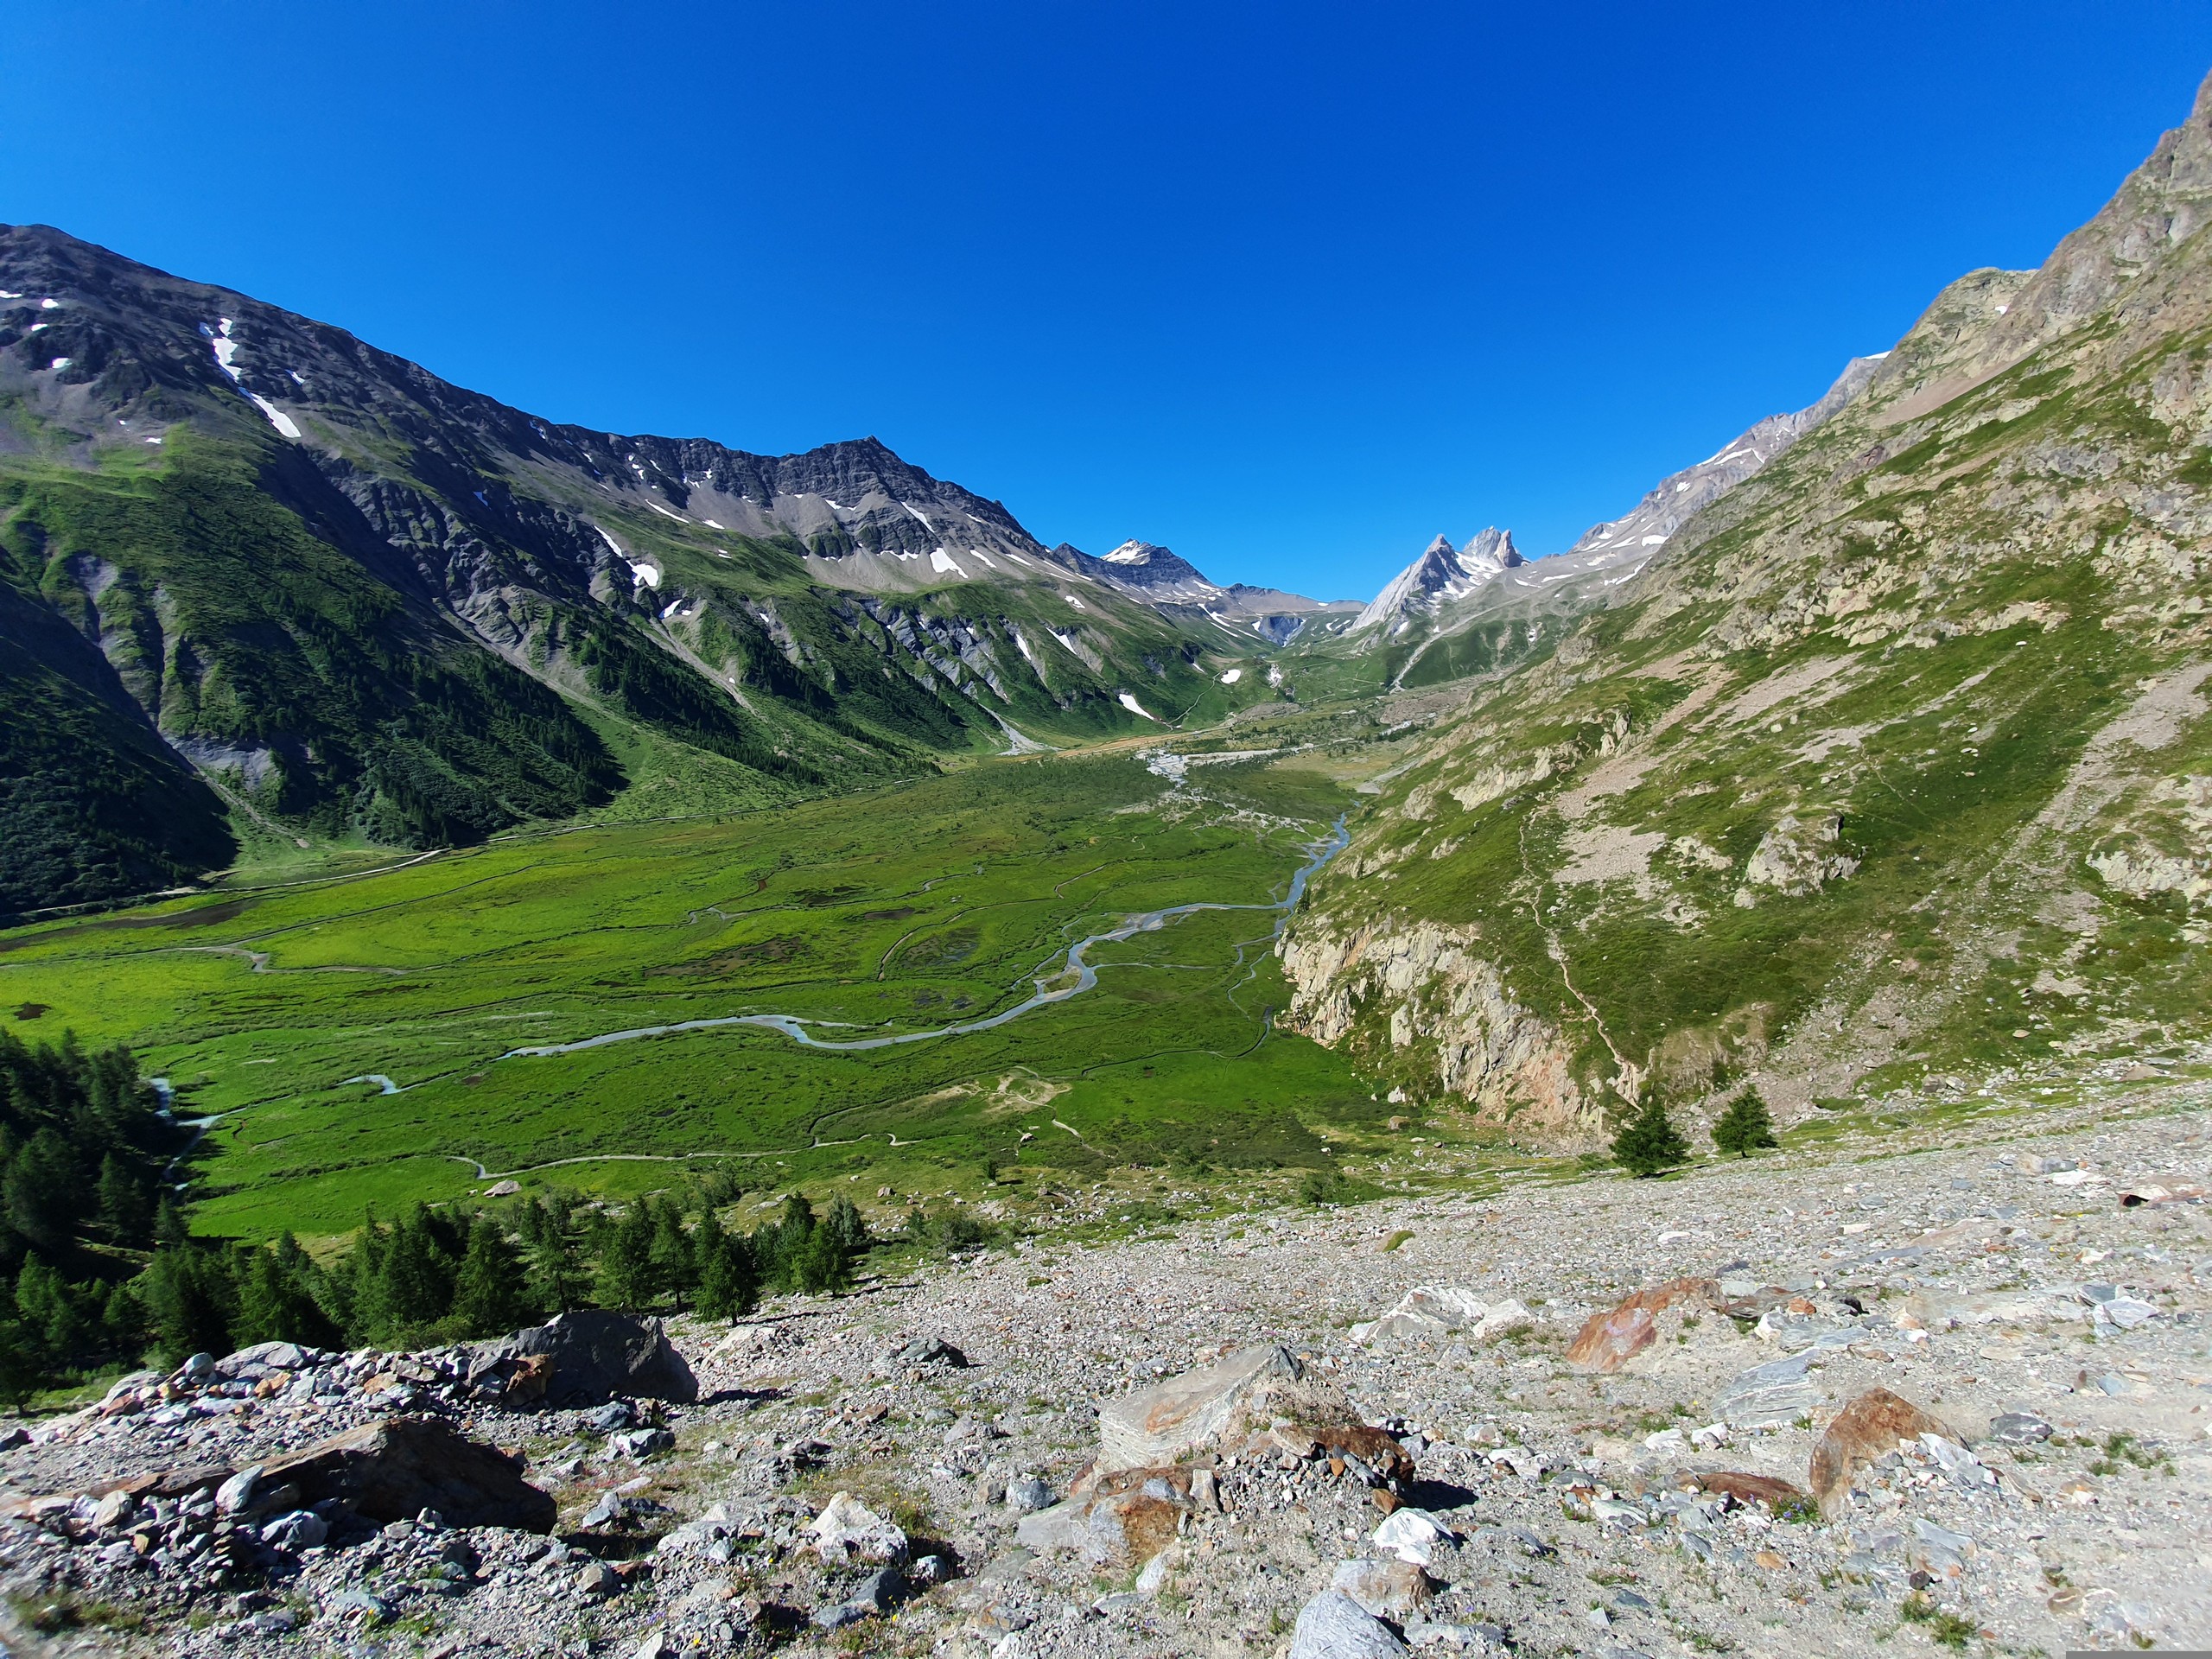 Expansive valleys between Chamonix and Courmayeur